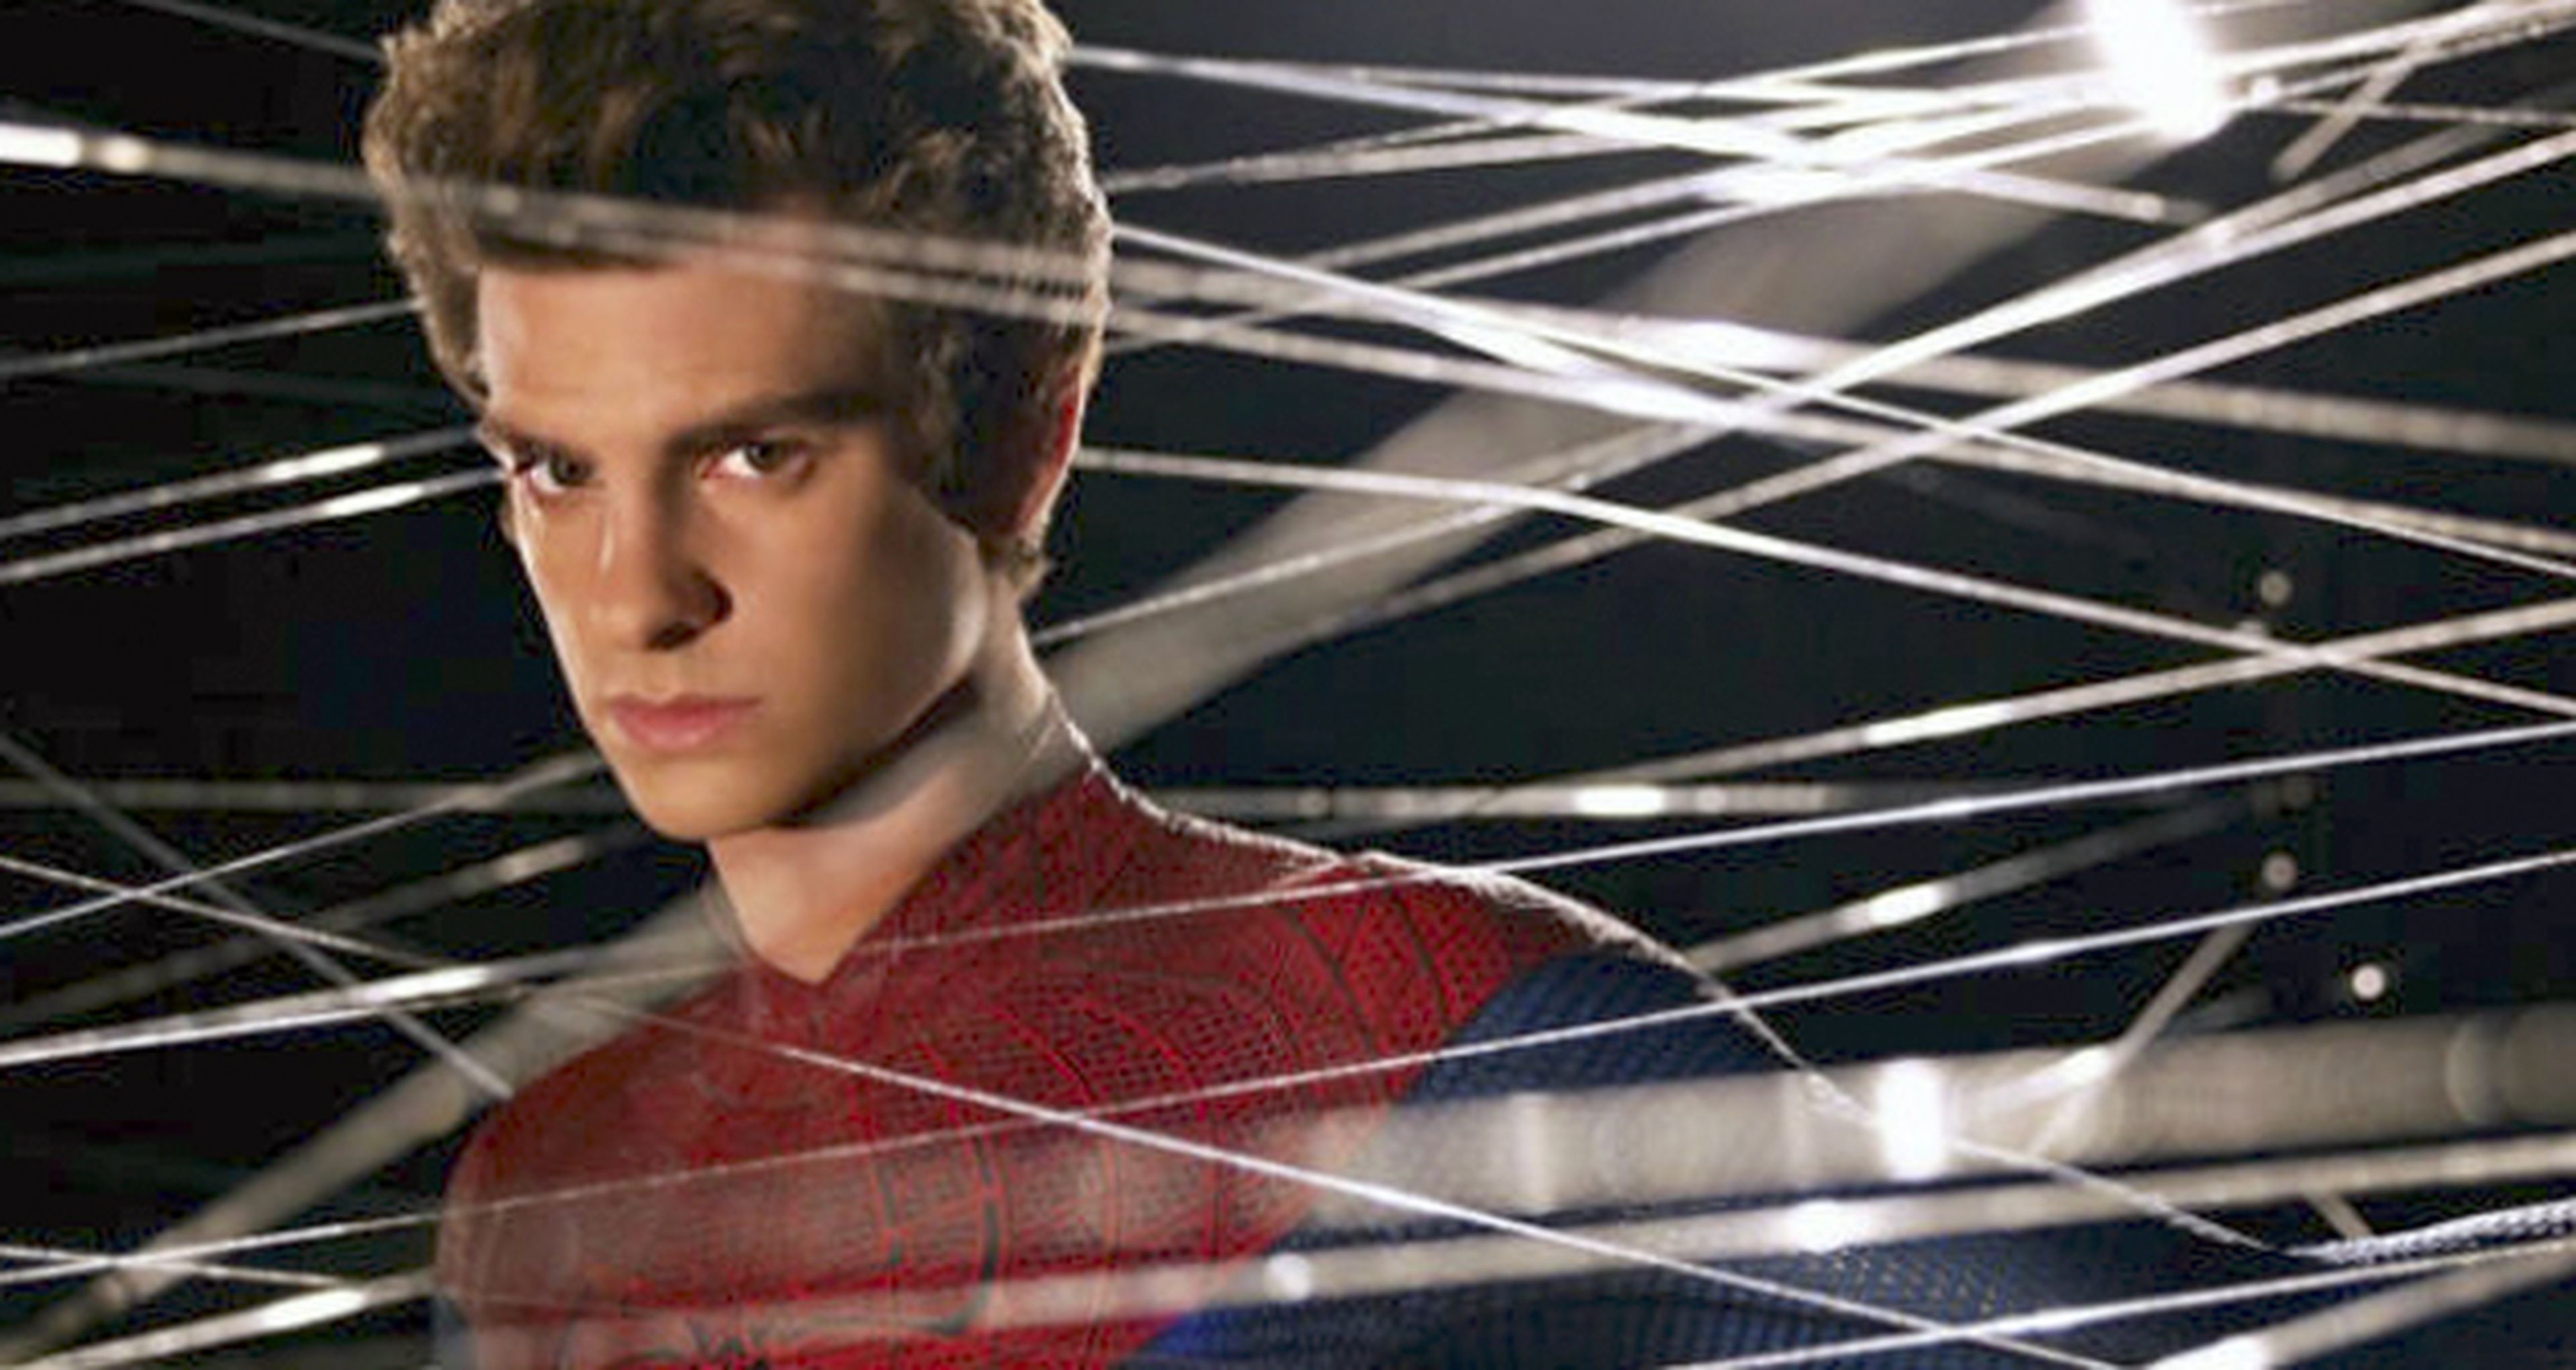 Spider-Man: Andrew Garfield deseaba trabajar con Marvel